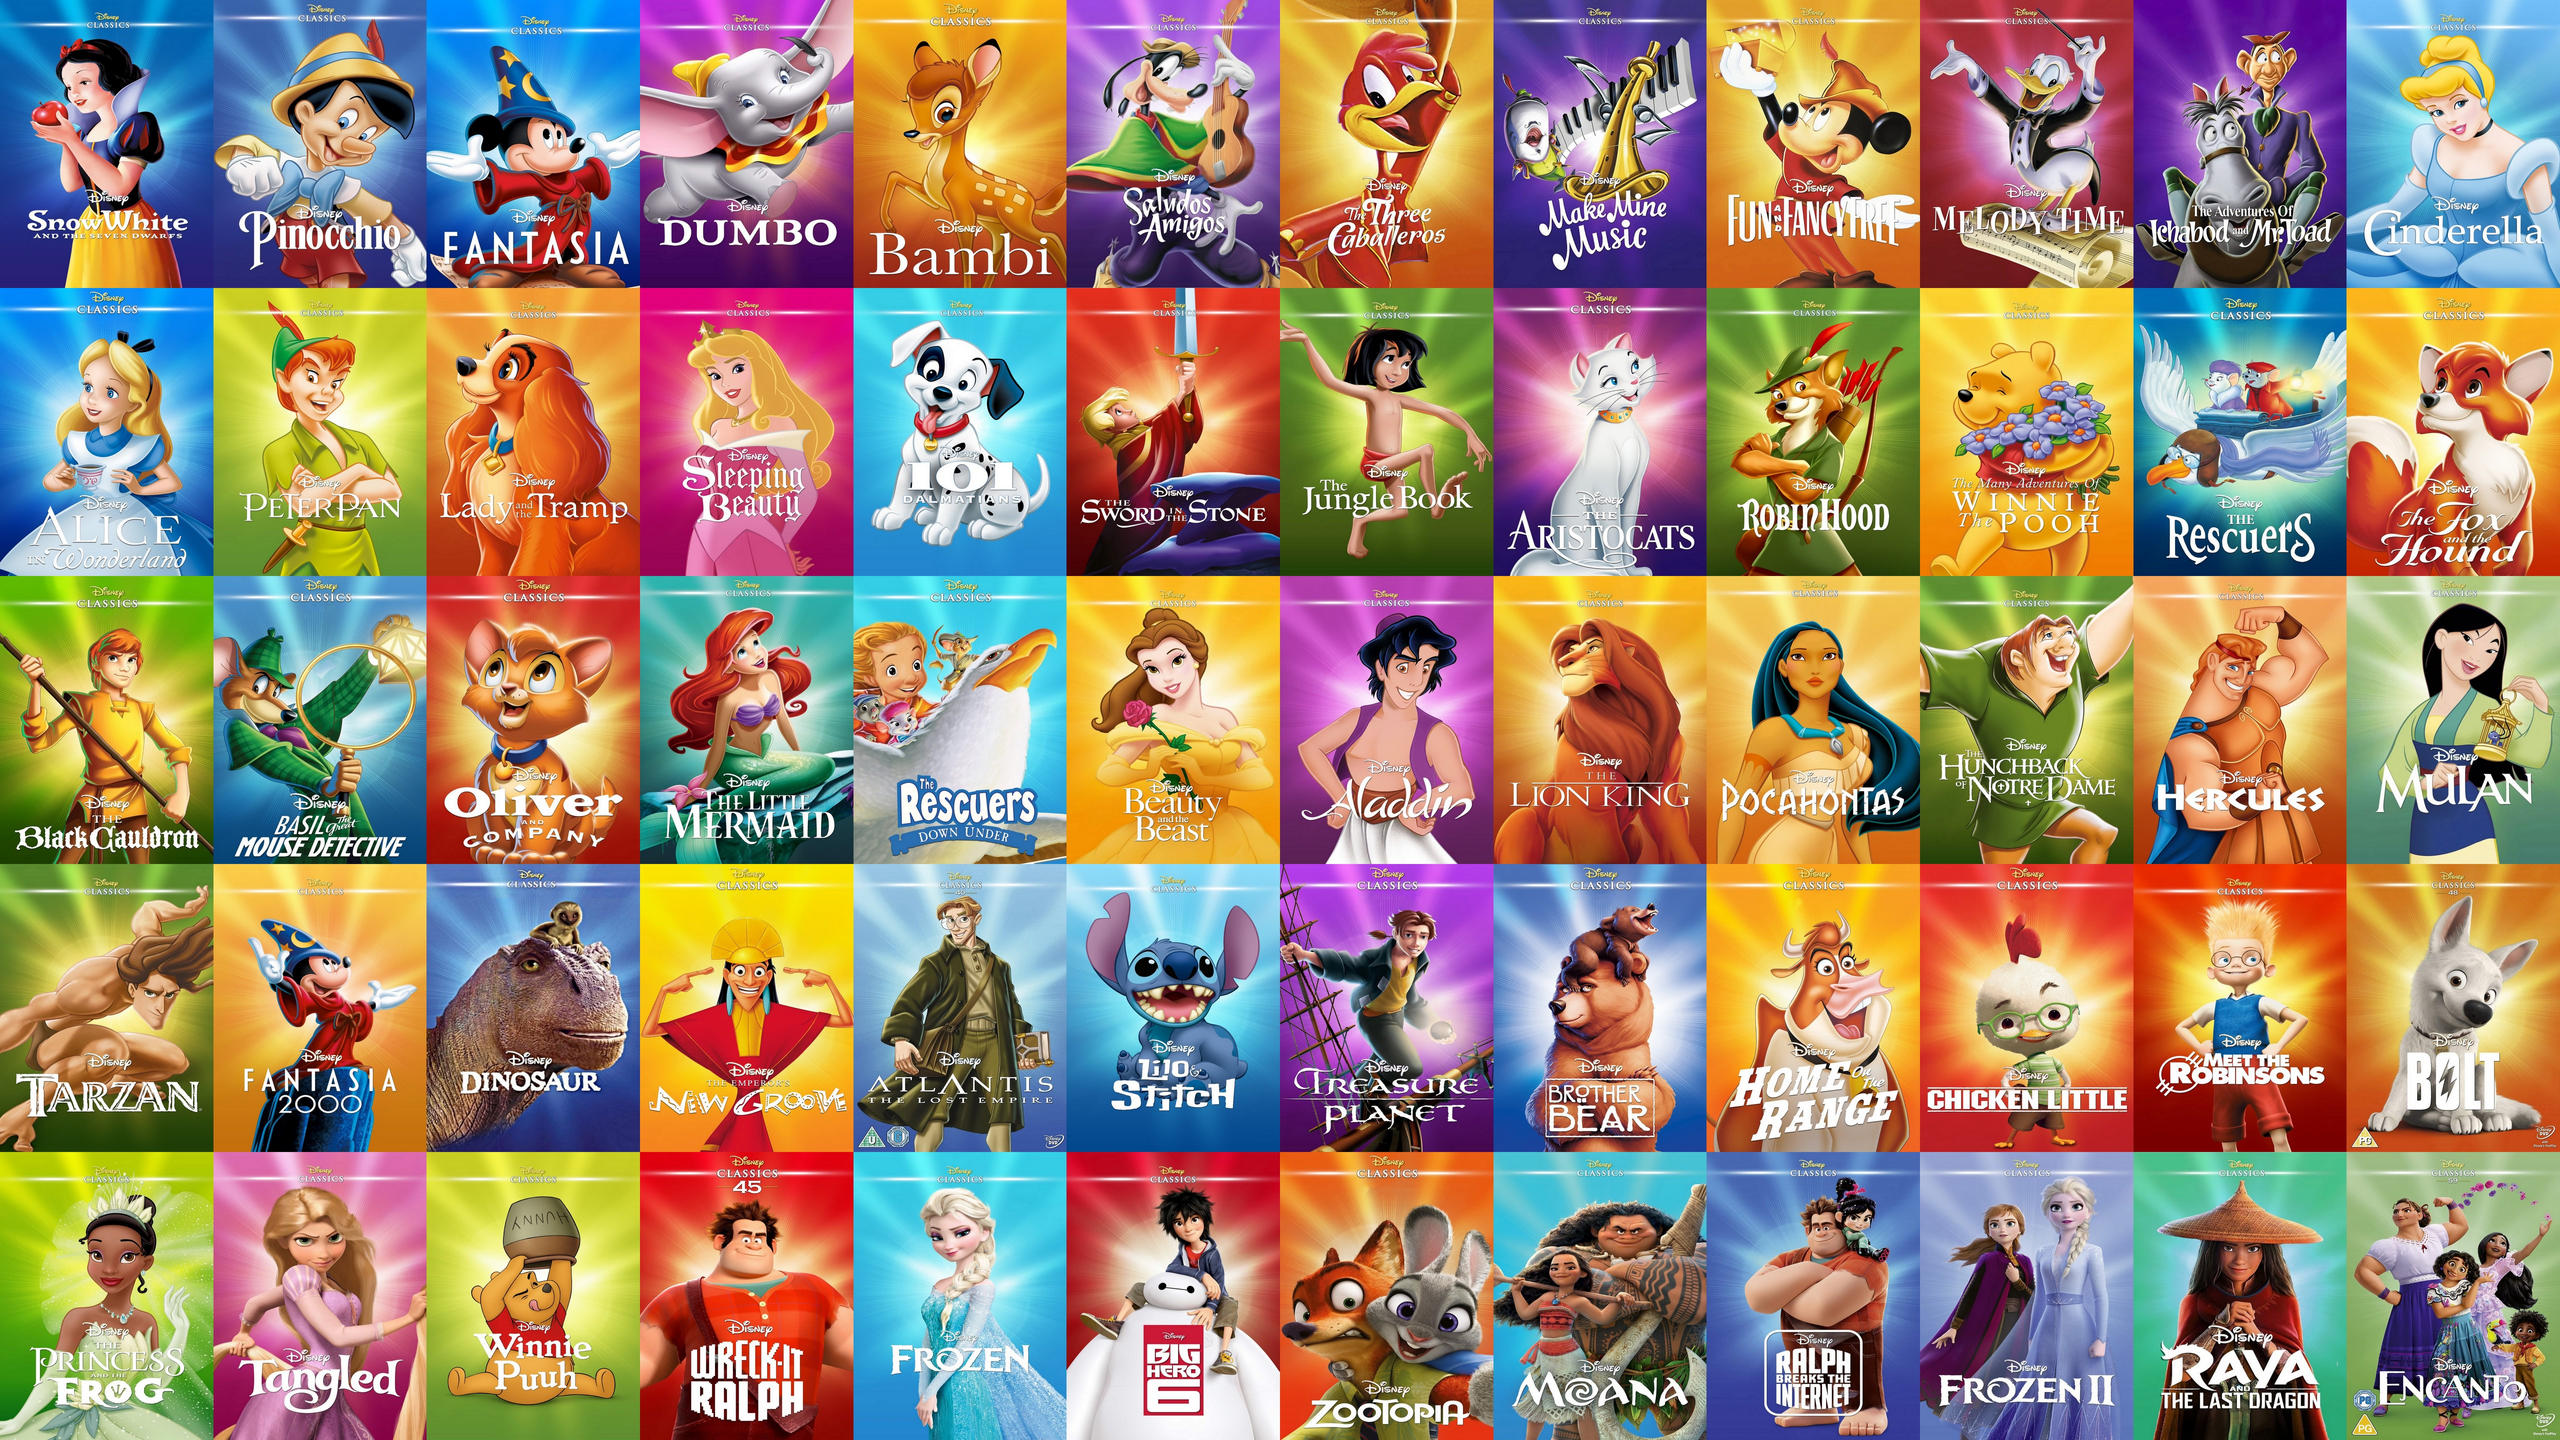 Disney animated classic movies collage